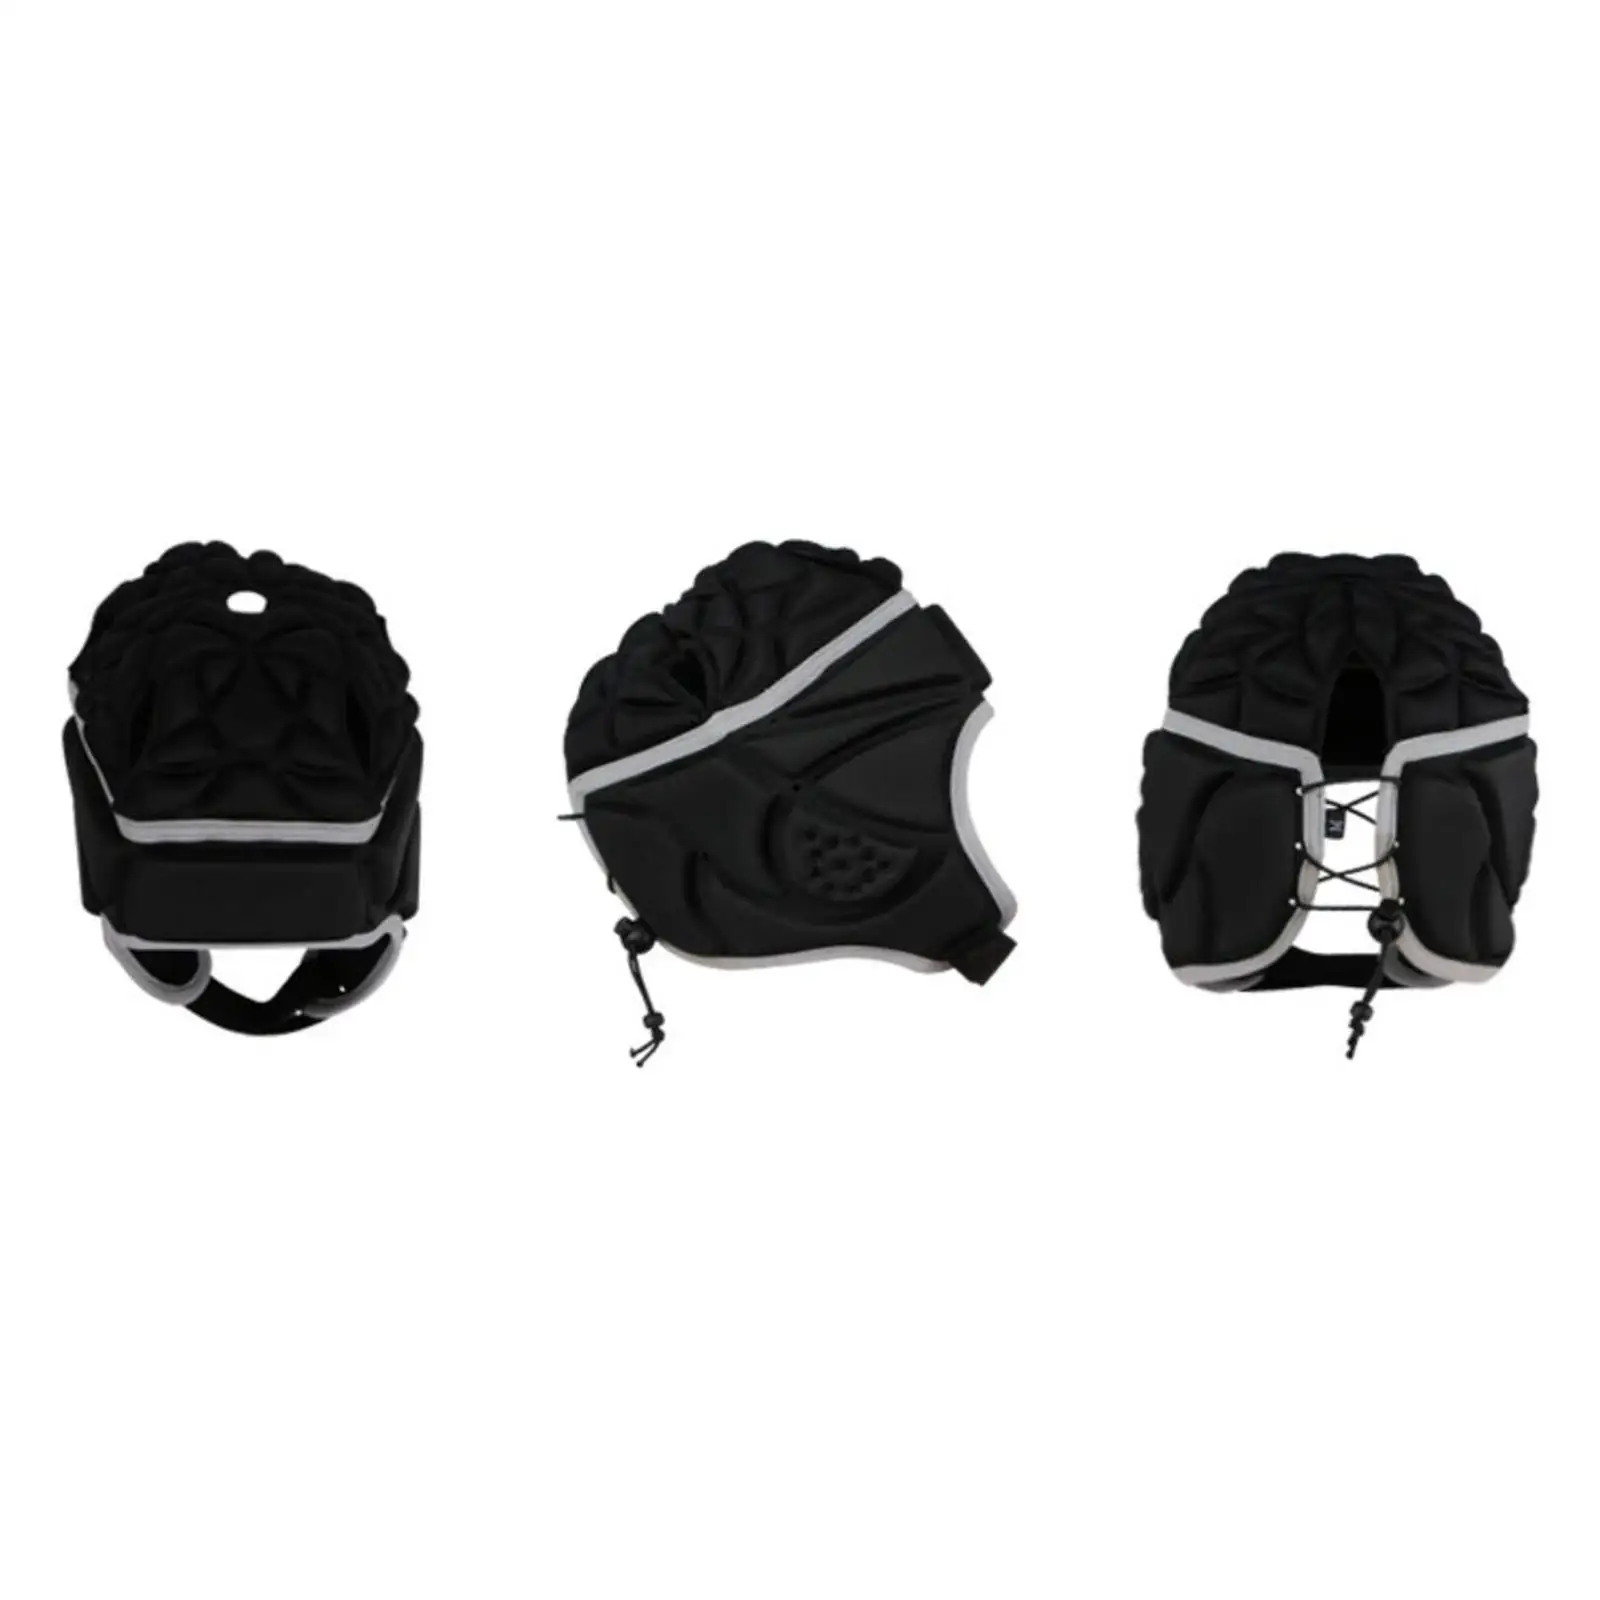 Rugby Headguard Protector Guard Wrestling Helmet Head Gear Sponge Padded Ice Hockey Helmet for Baseball Skateboard Boxing